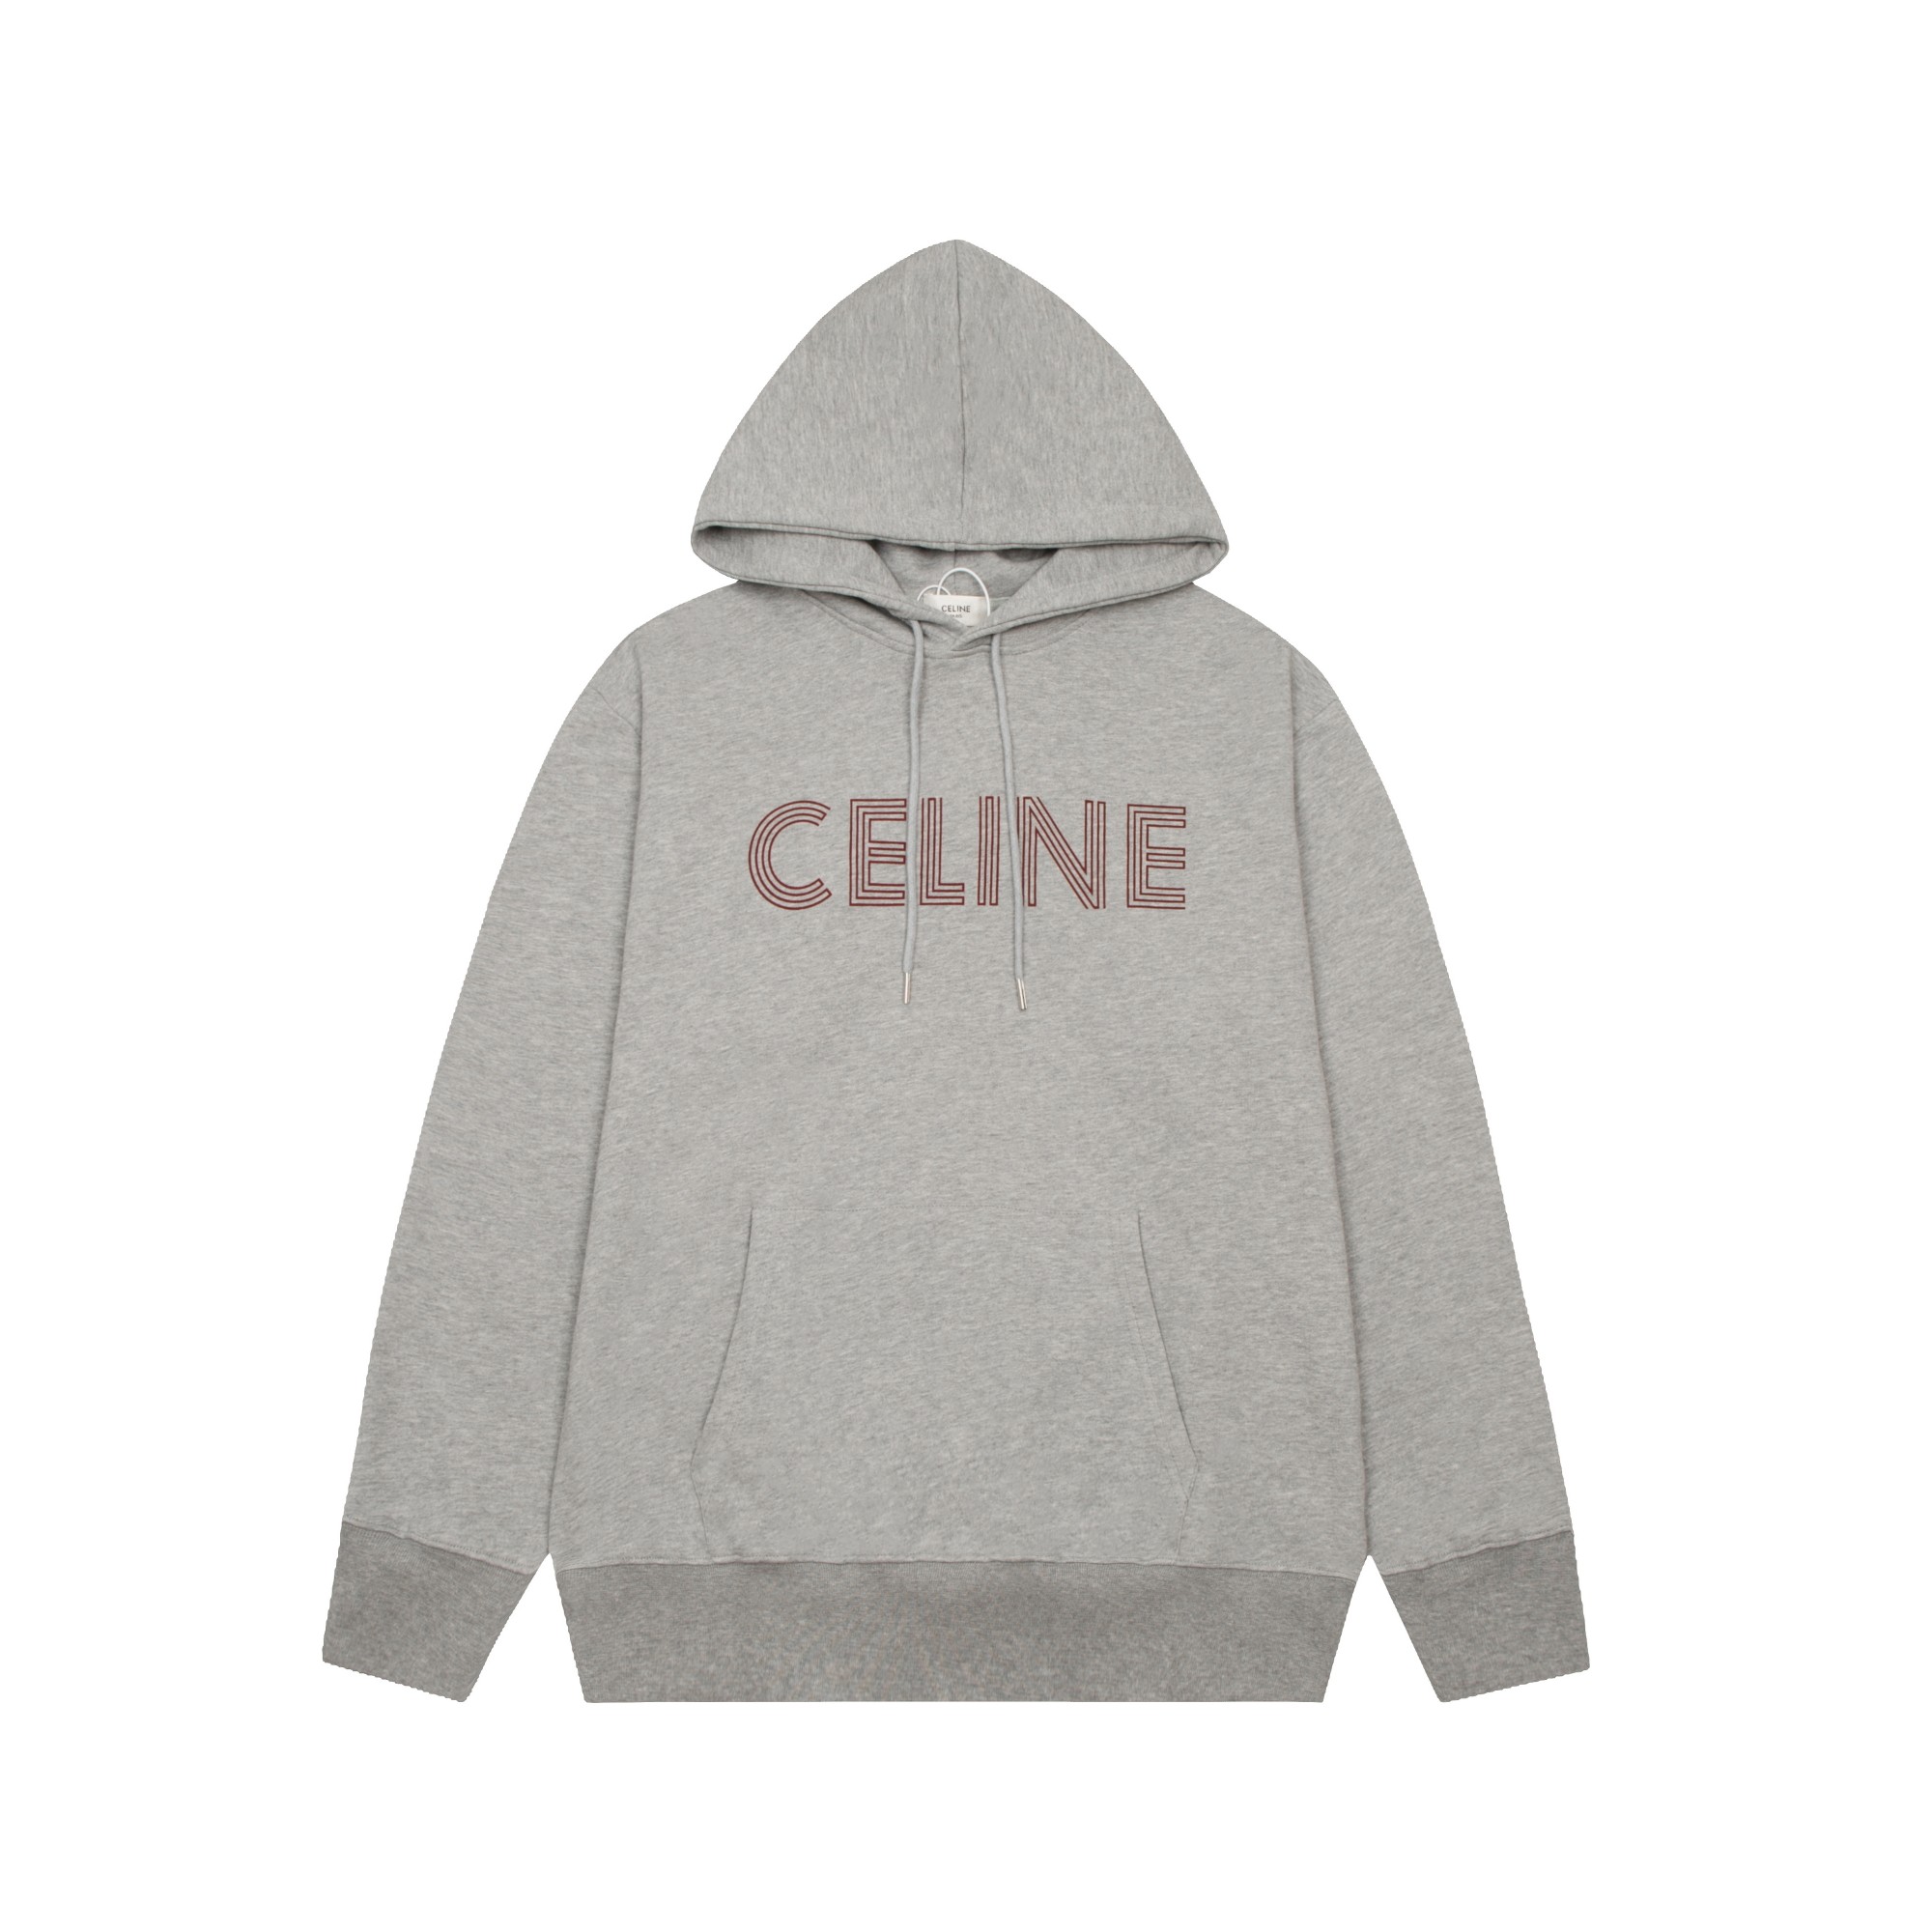 Celine autumn and winter series letter hooded sweatshirt